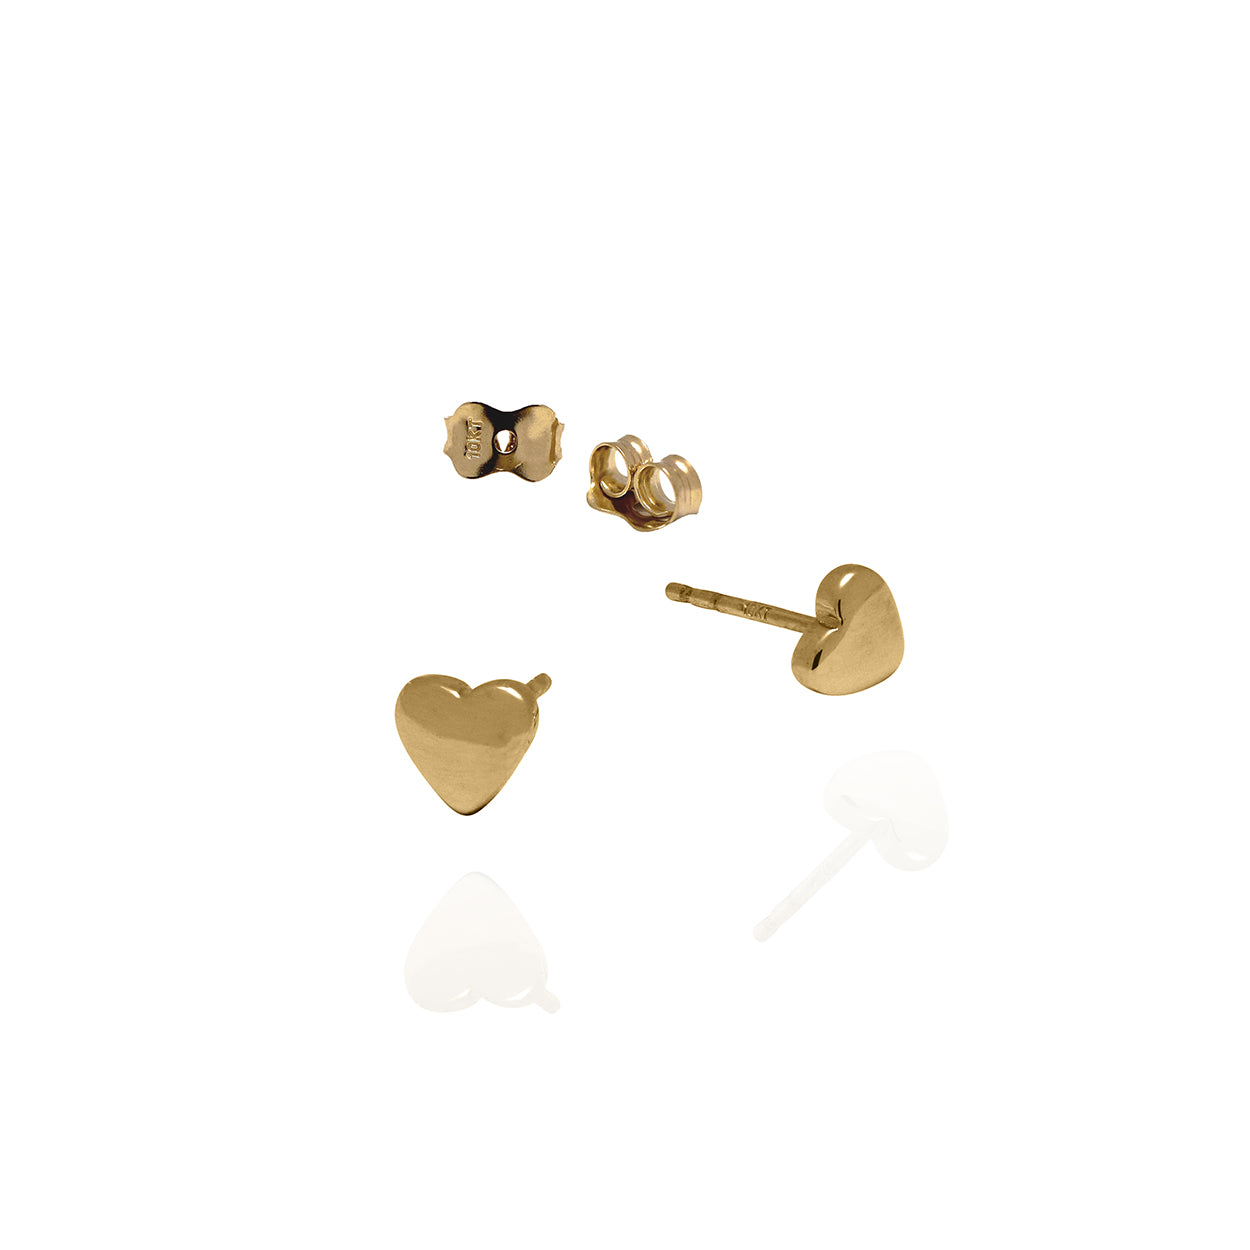 10kt Yellow Gold Full Heart Stud Earrings